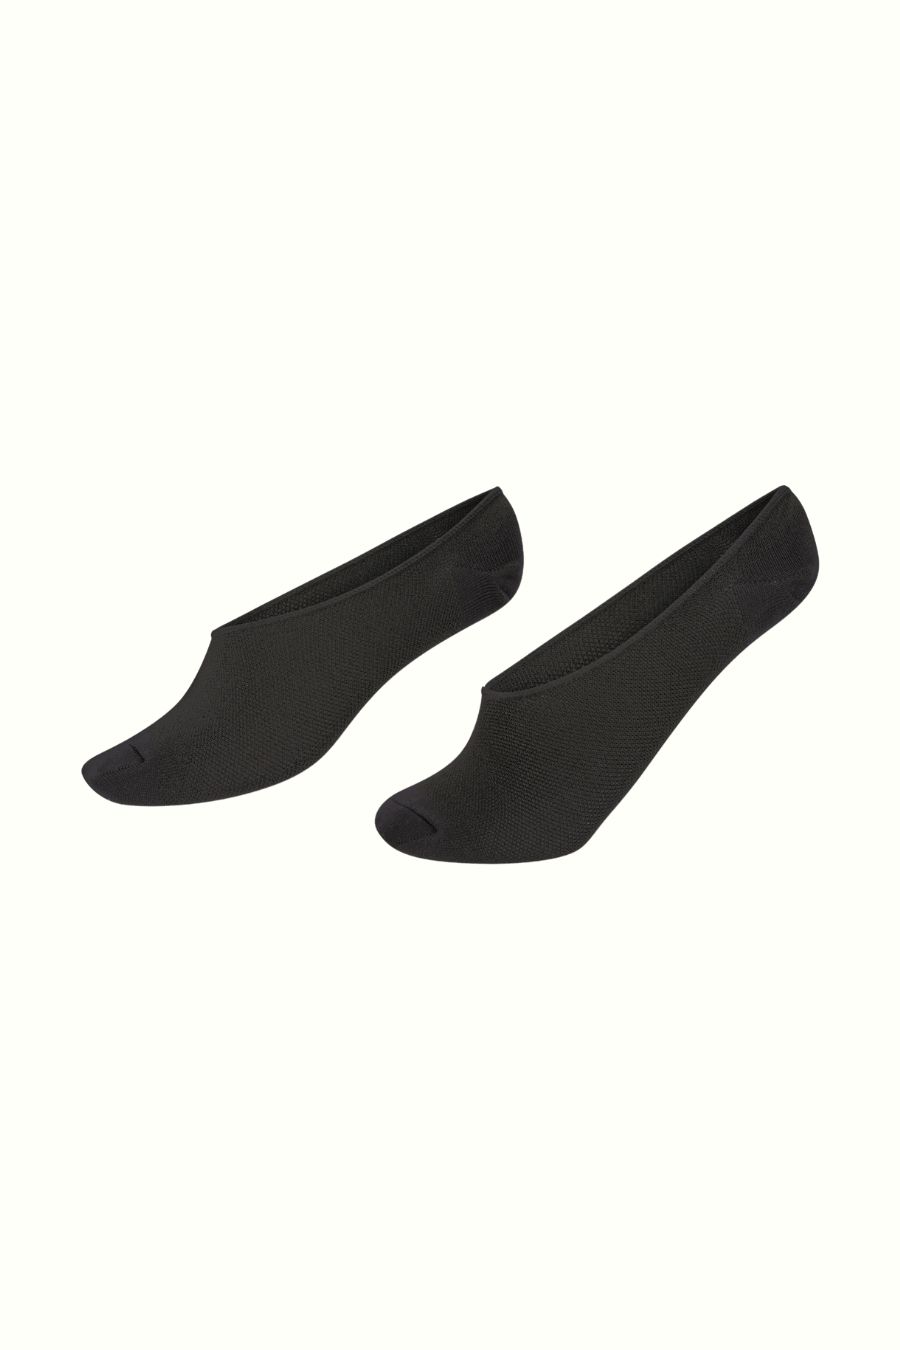 No-Show Socks - 2 Pack - Black